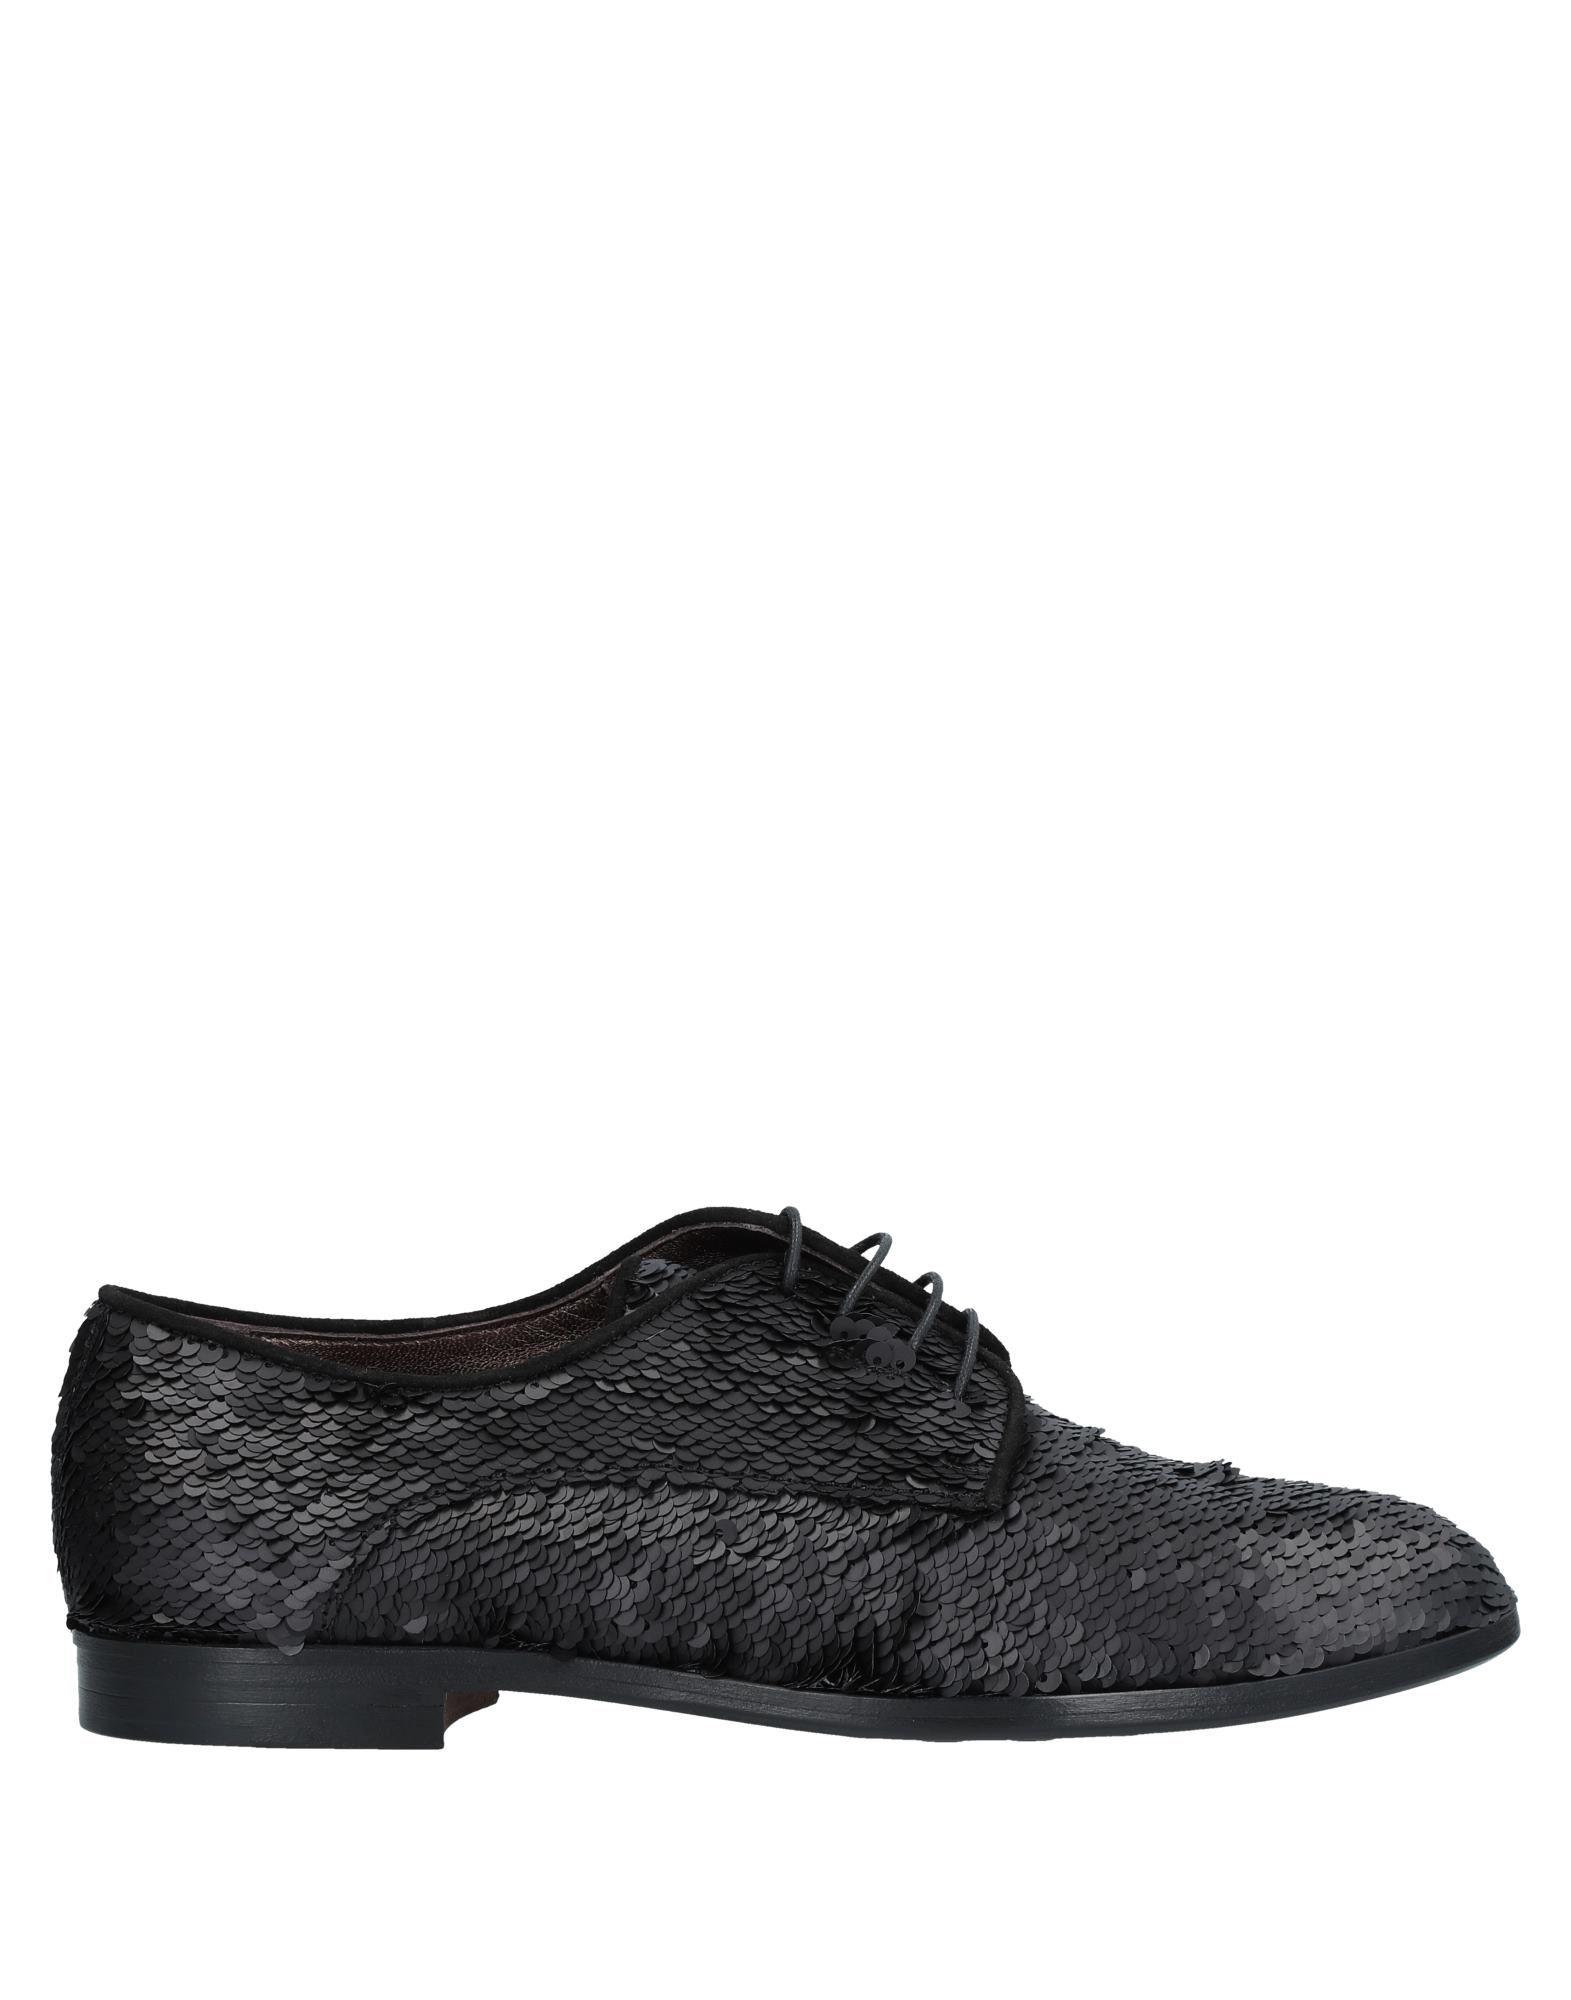 Agl Attilio Giusti Leombruni Leather Lace-up Shoe in Black - Lyst